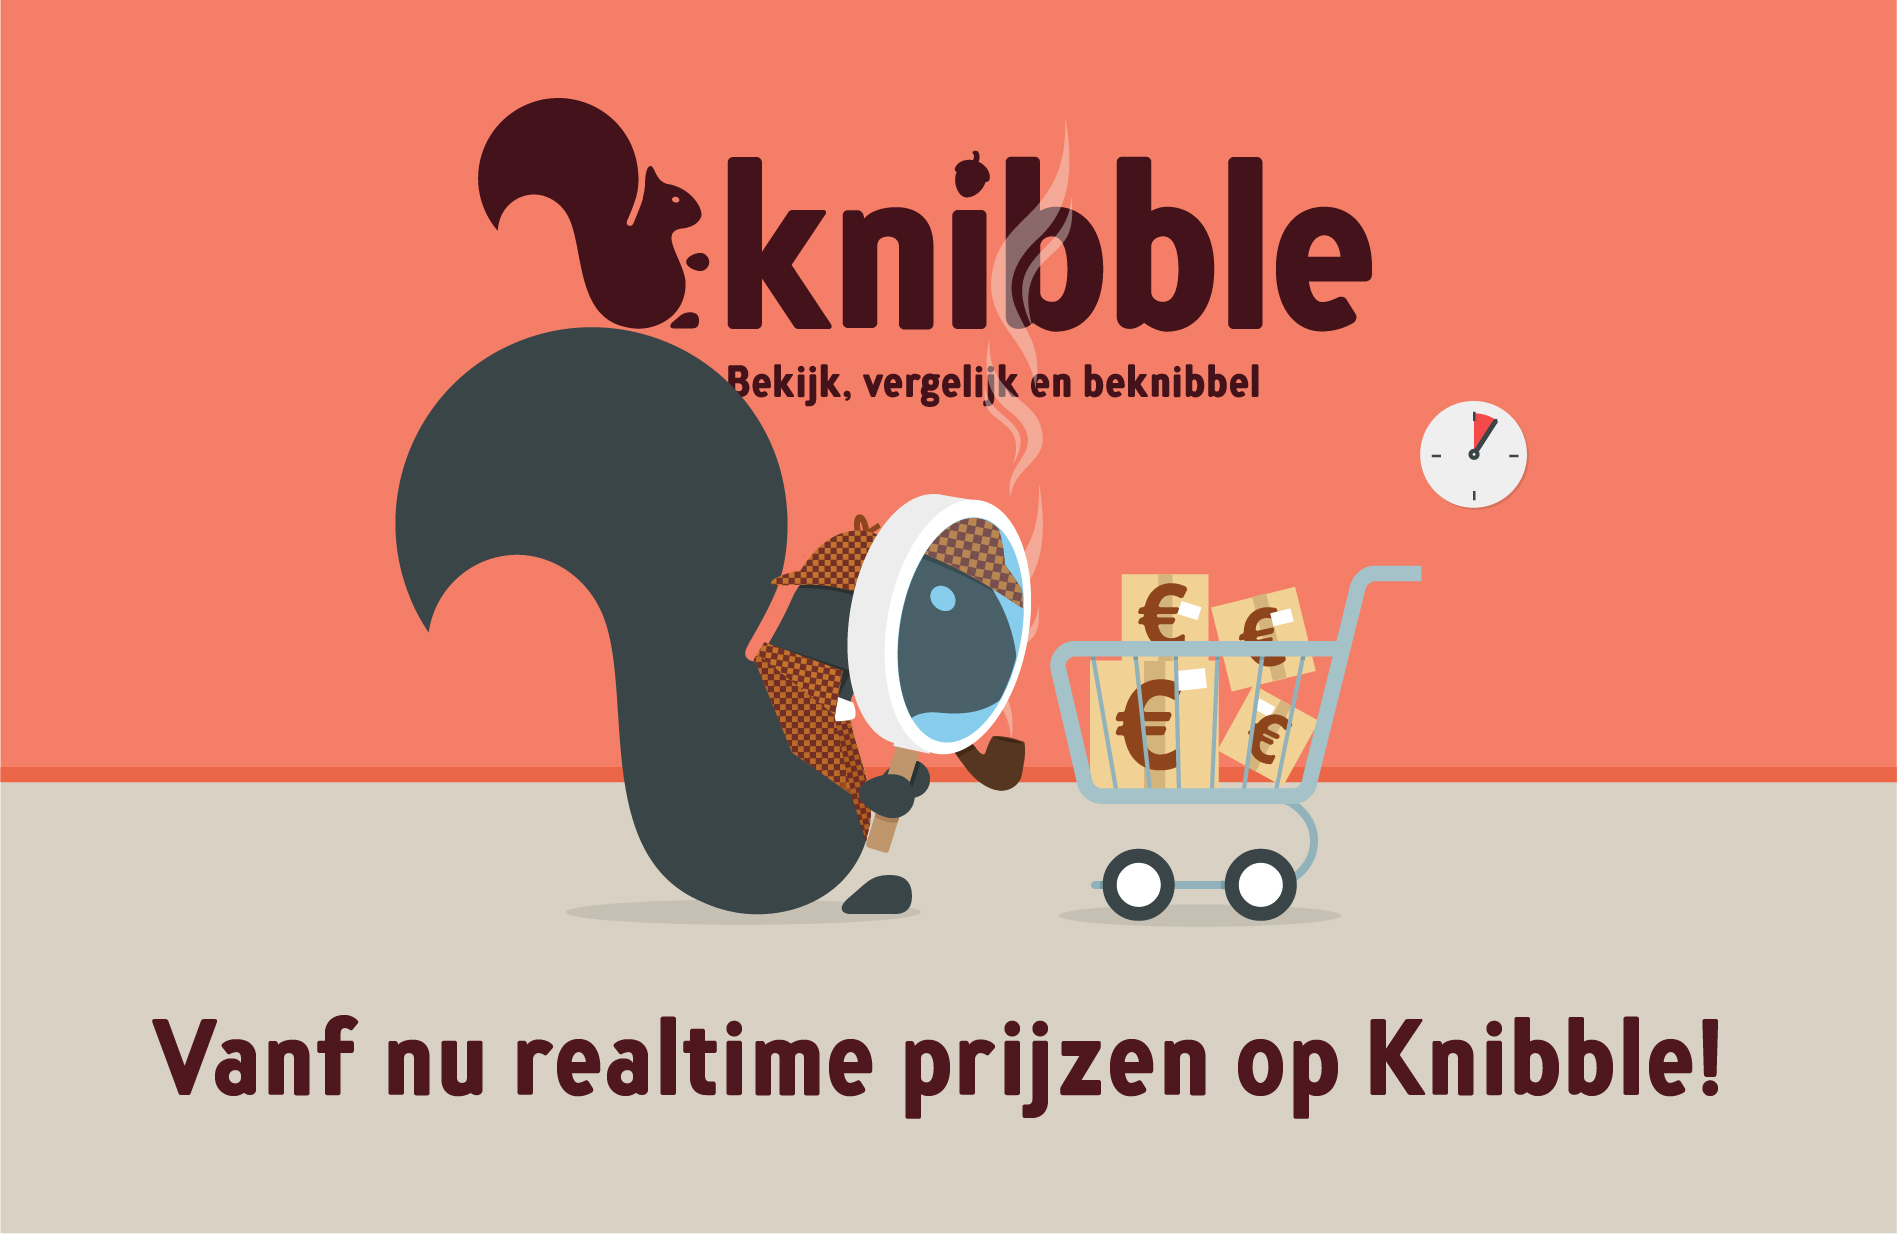 Knibble realtime prijzen